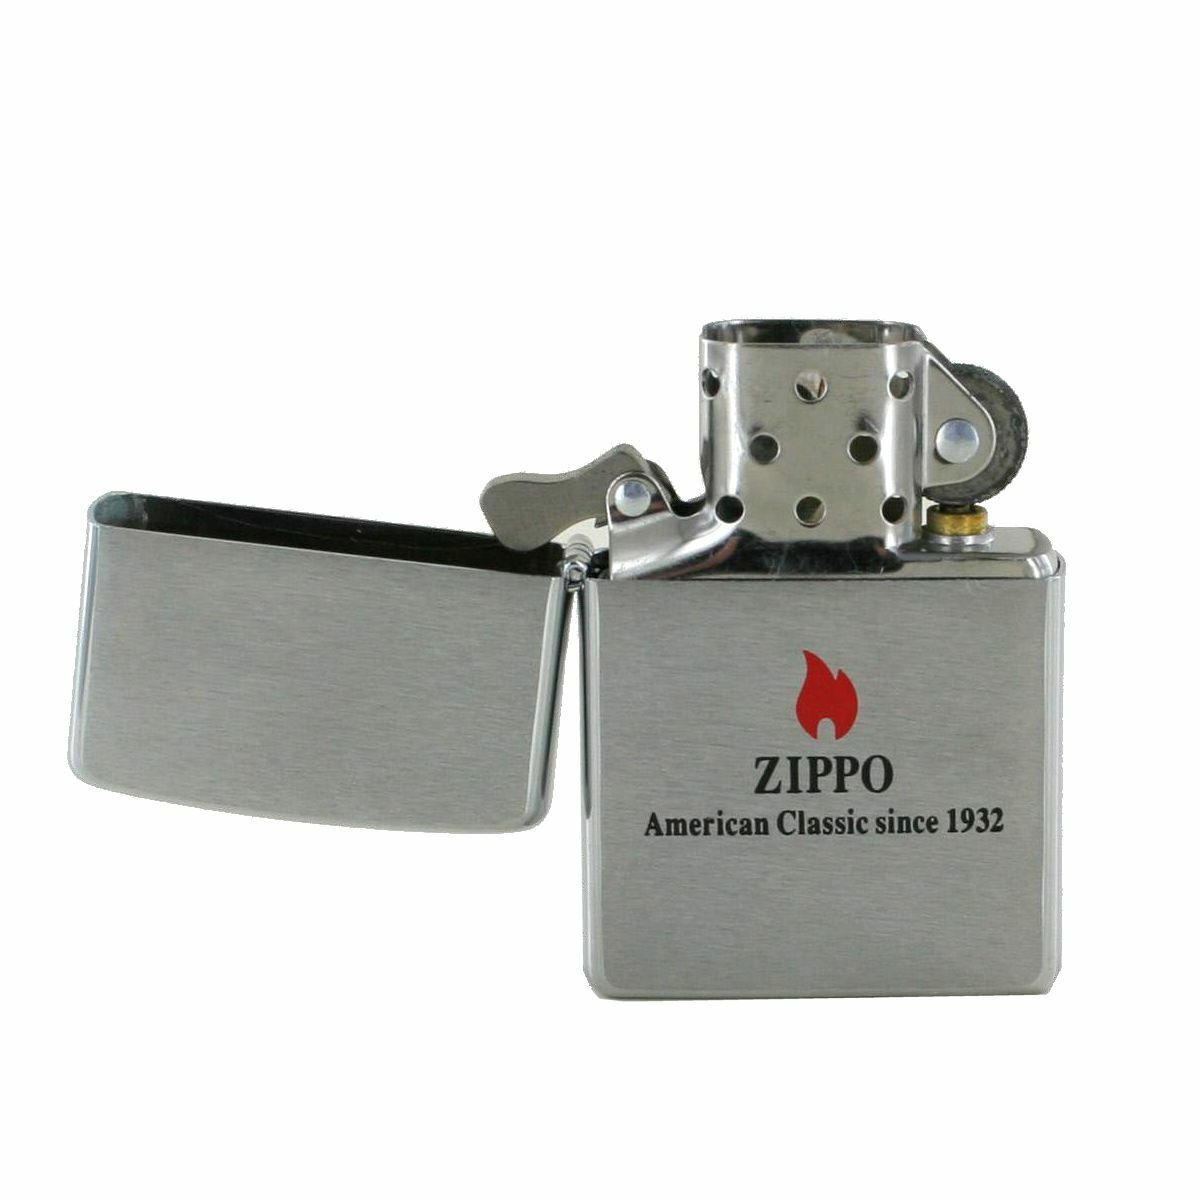 Zippo Lighter Model 200 Zippo American Classic Since 1932